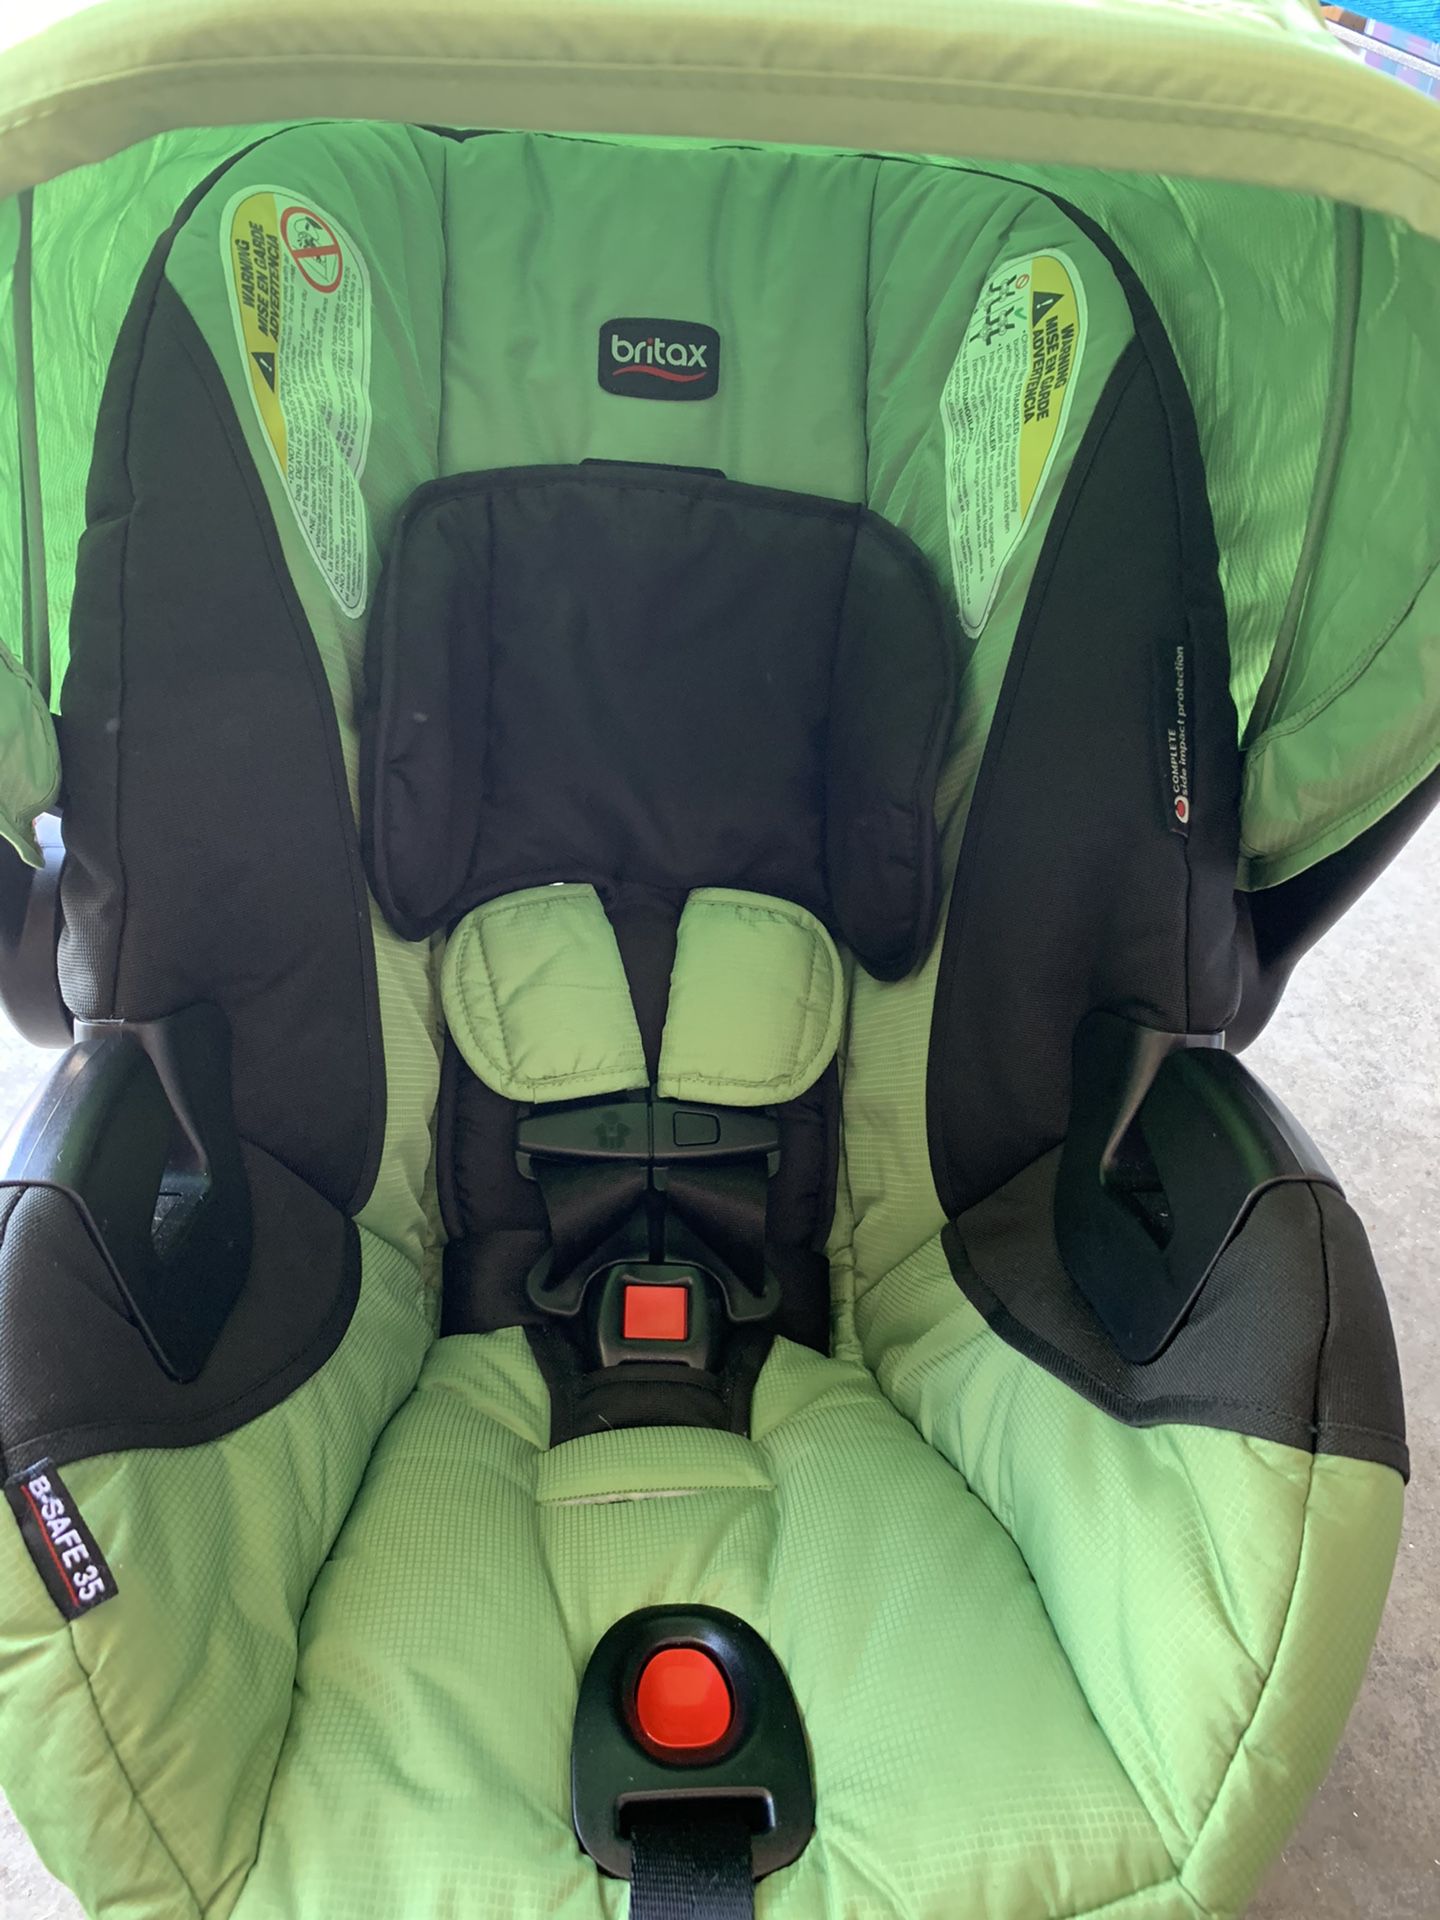 Britax B Safe 35 infant car seat